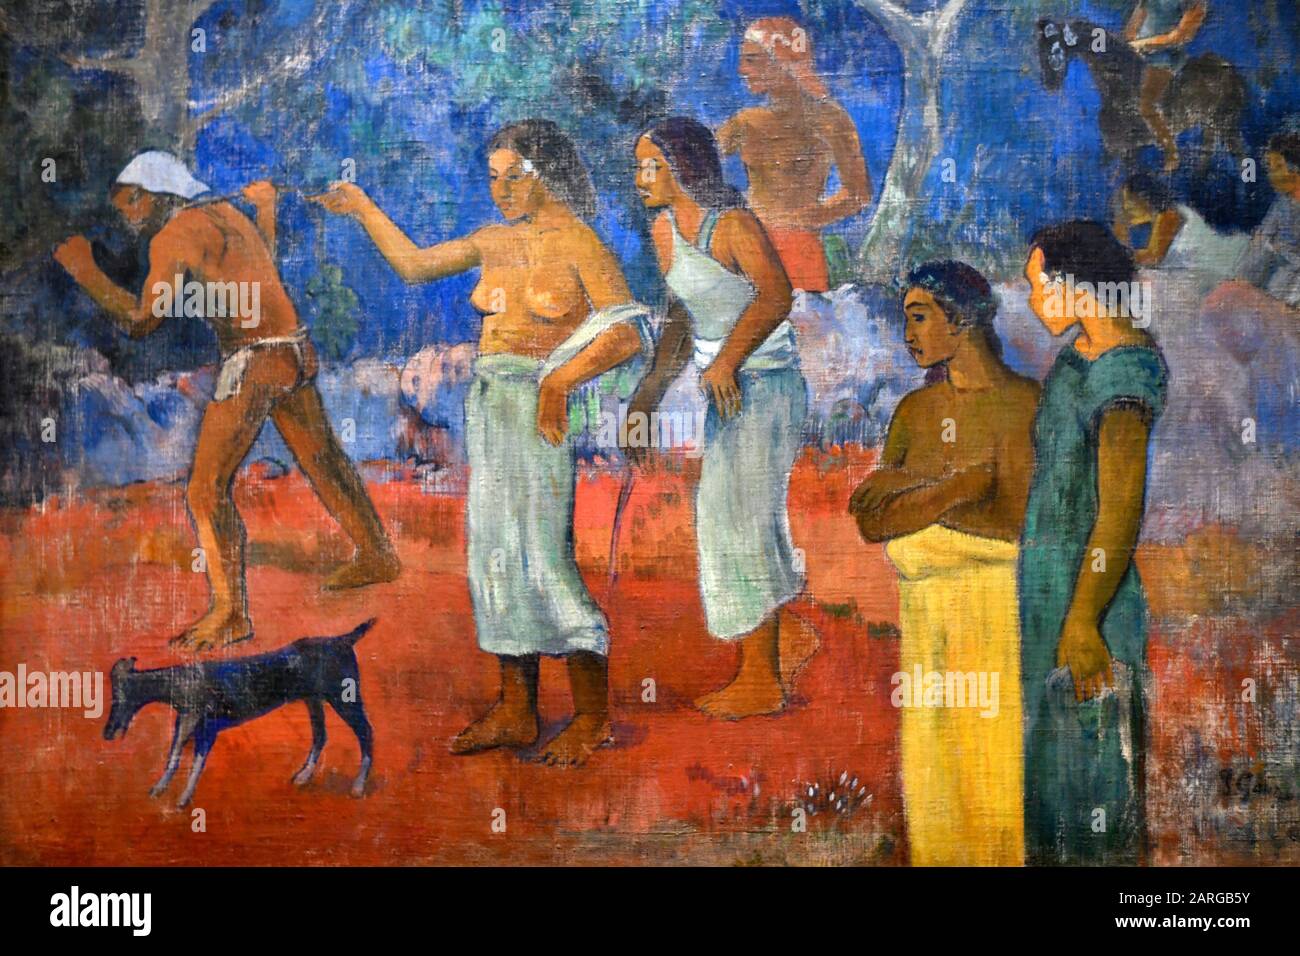 Scena di vita tahitiana, 1896, pittura di Paul Gauguin, museo Hermitage, Russia di San Pietroburgo, Europa. Foto Stock